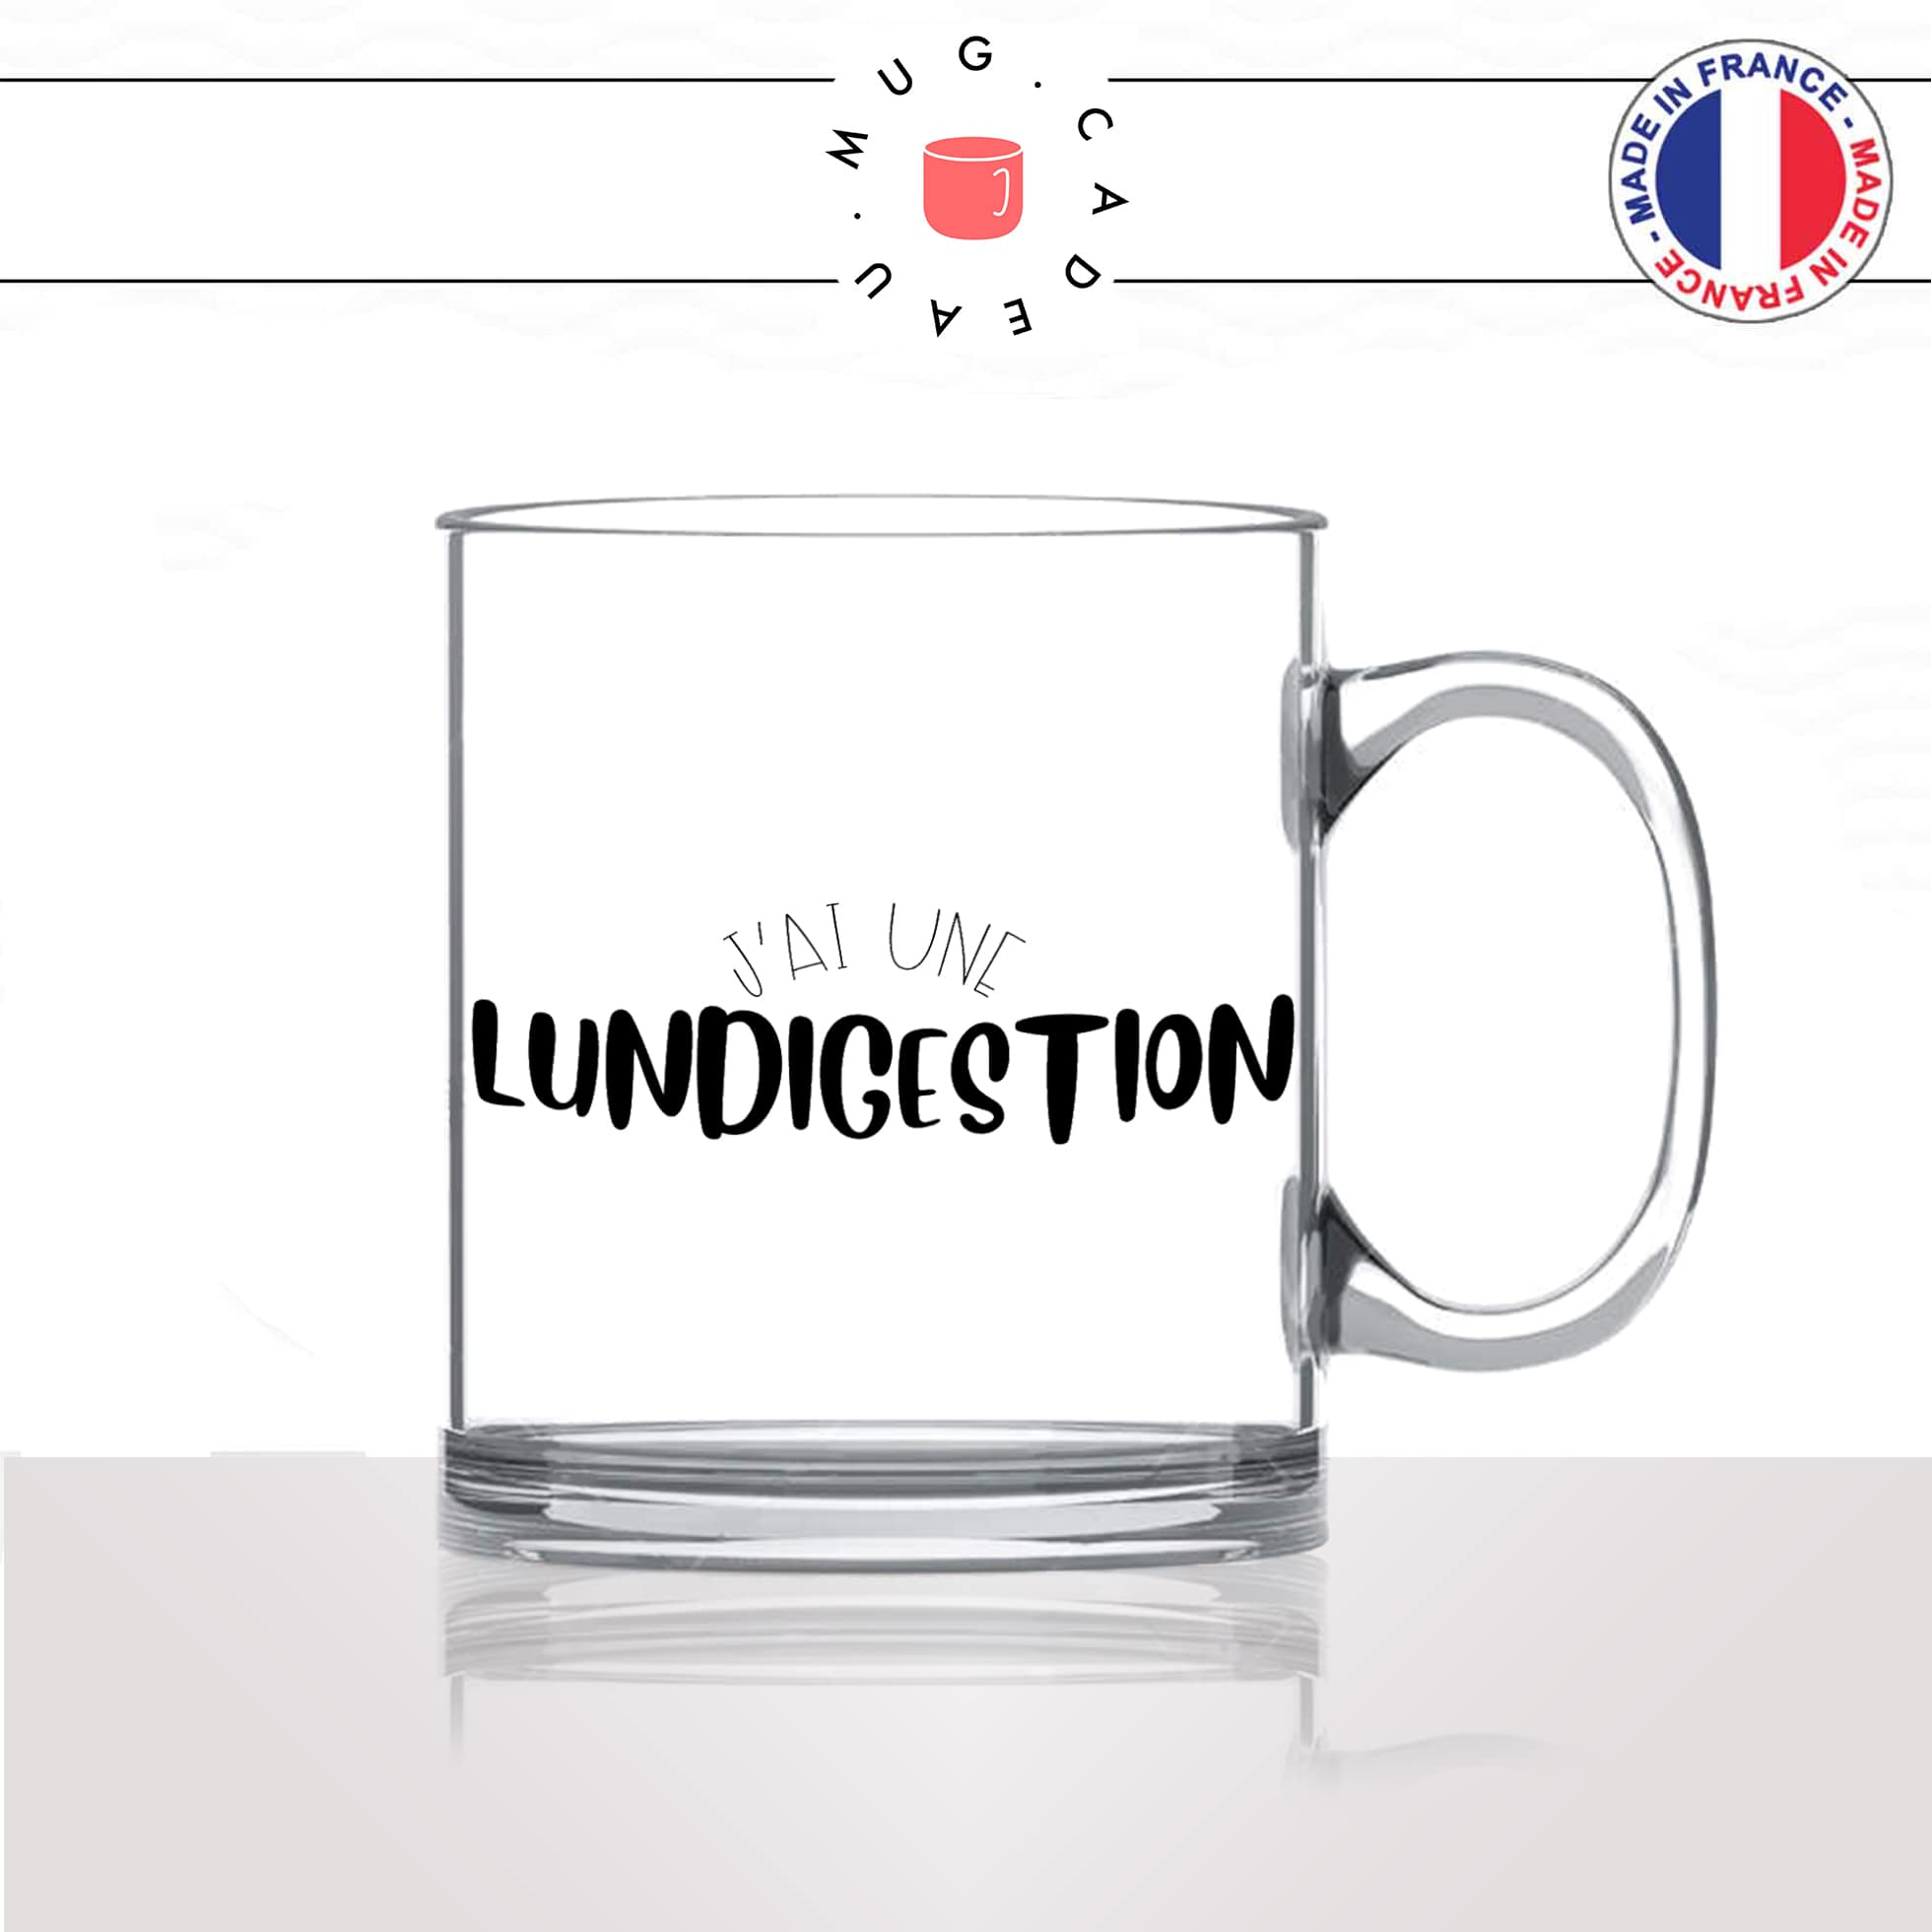 mug-tasse-en-verre-transparent-glass-jai-une-lundigestion-indigestion-lundi-collegue-travail-week-end-humour-idée-cadeau-fun-cool-café-thé-original2-min